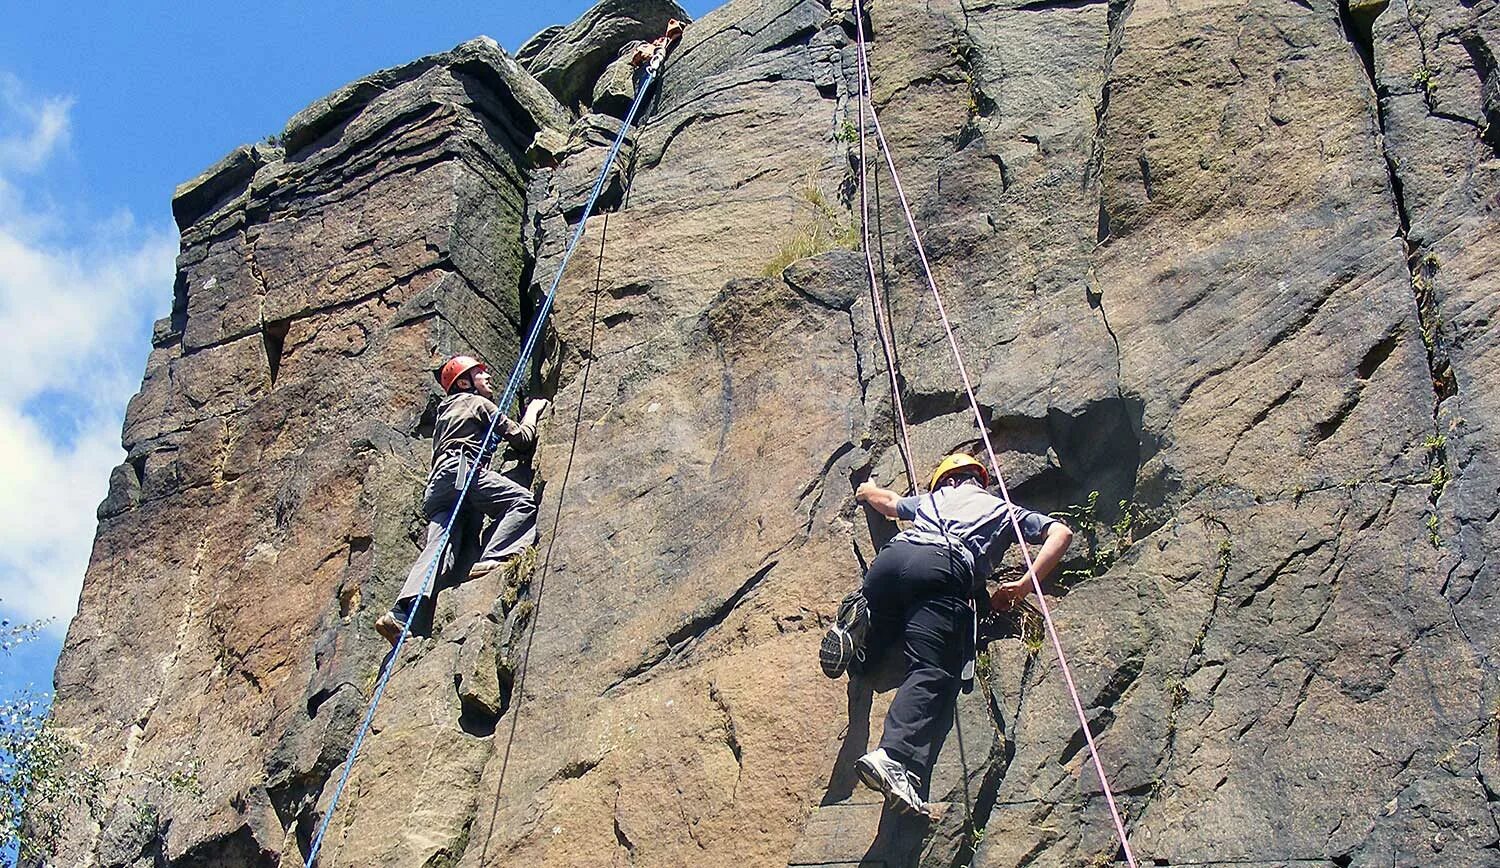 Известный рок Клайминг. Climb формы. Climbing Training. Rock Climbing. Rock climber rock climber org ru